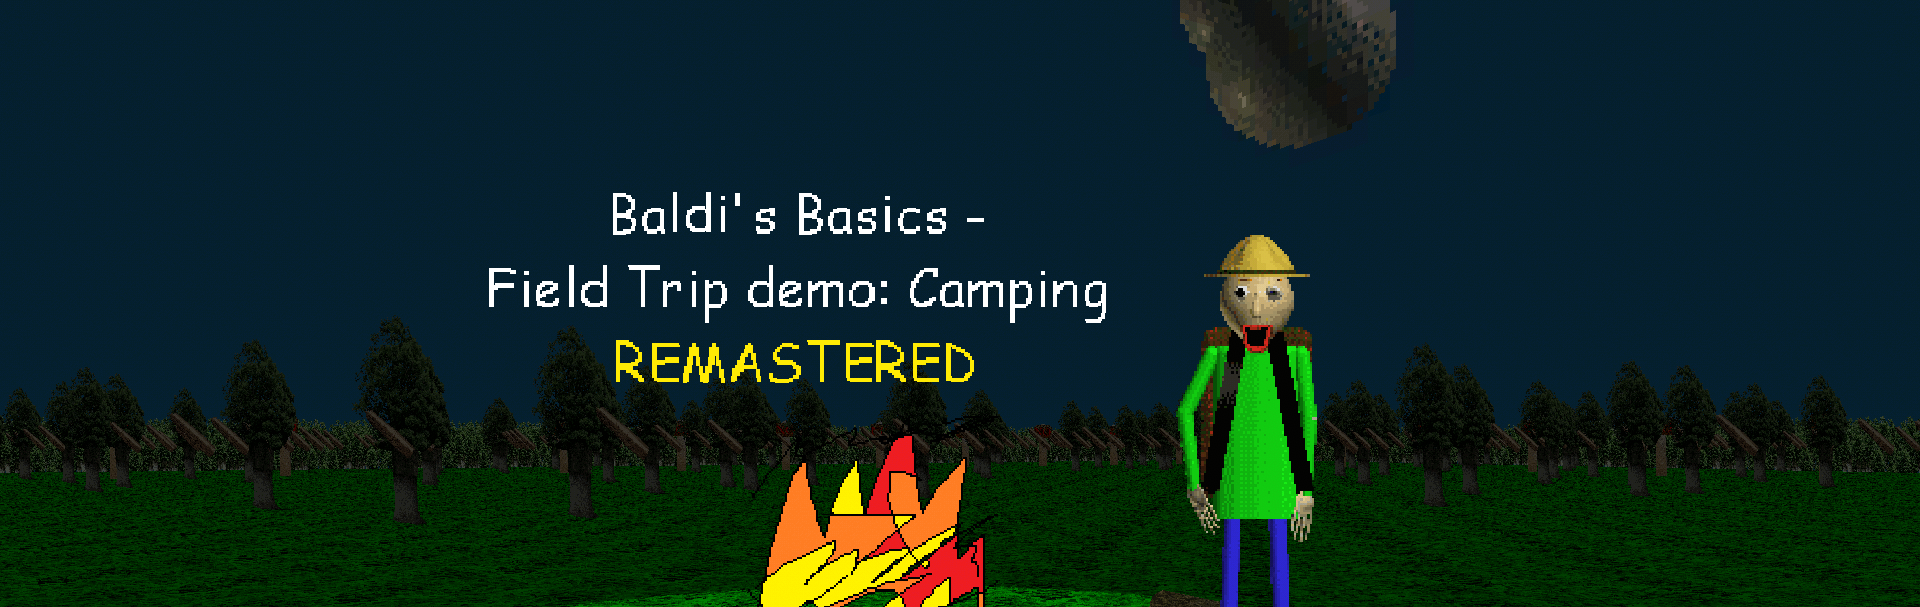 Baldi Basics Camping Field Trip Demo by I am no one - Game Jolt